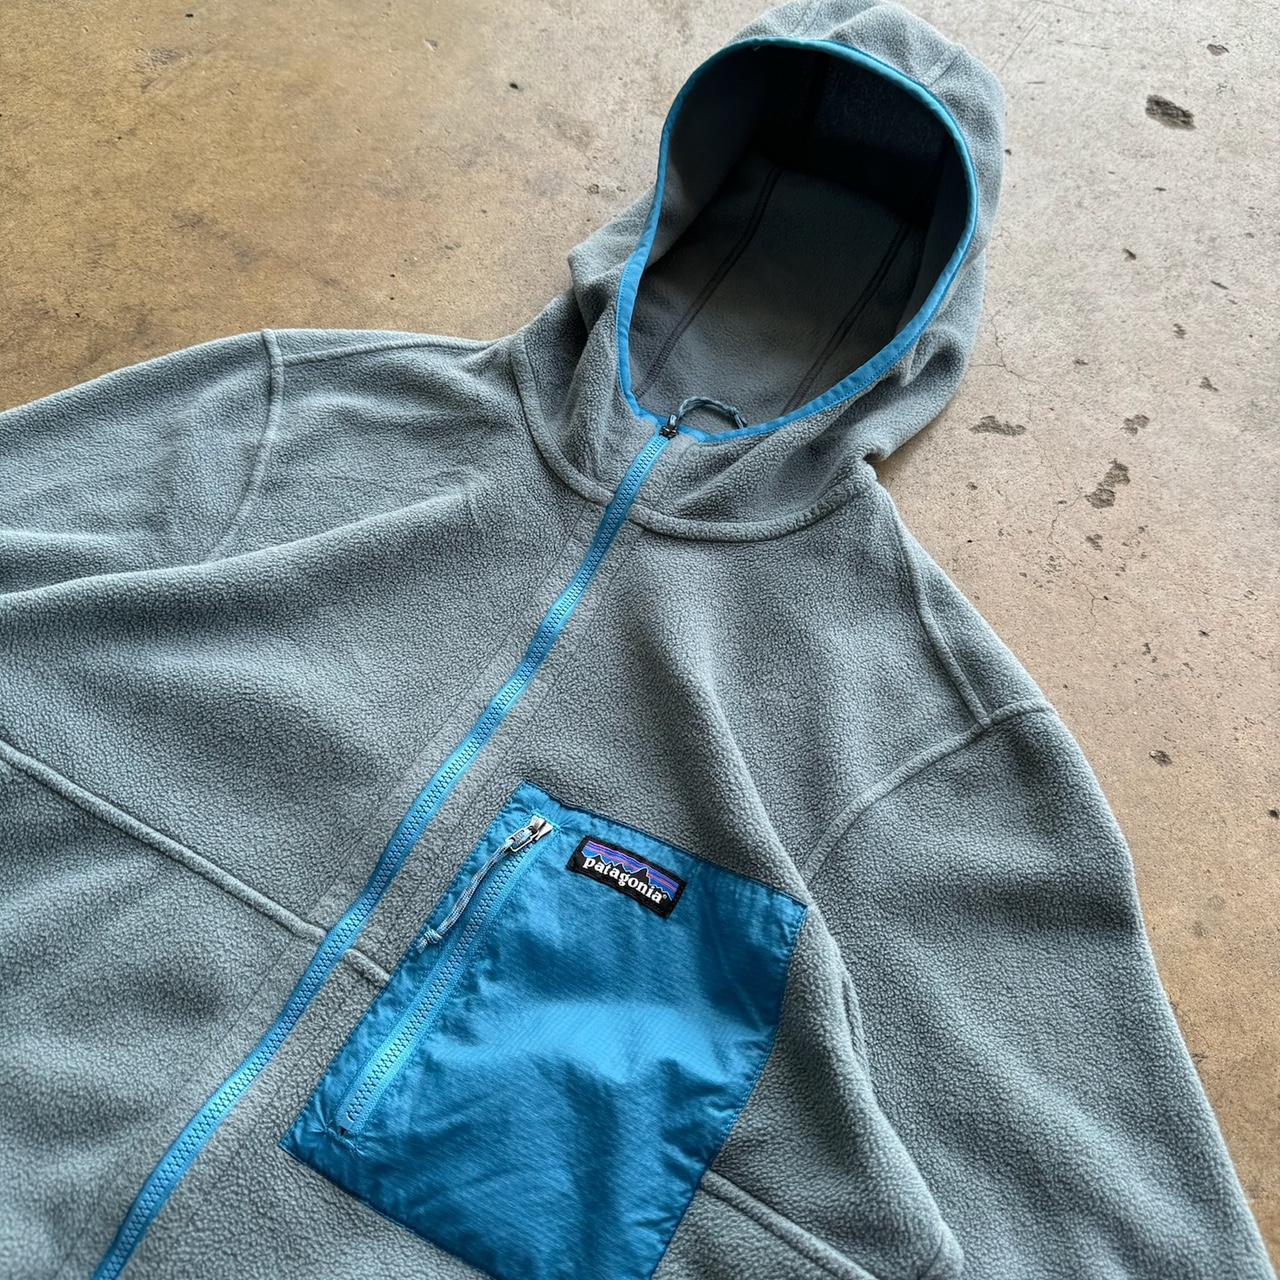 Patagonia Microdni Fleece Hooded full zip Jacket Size Medium